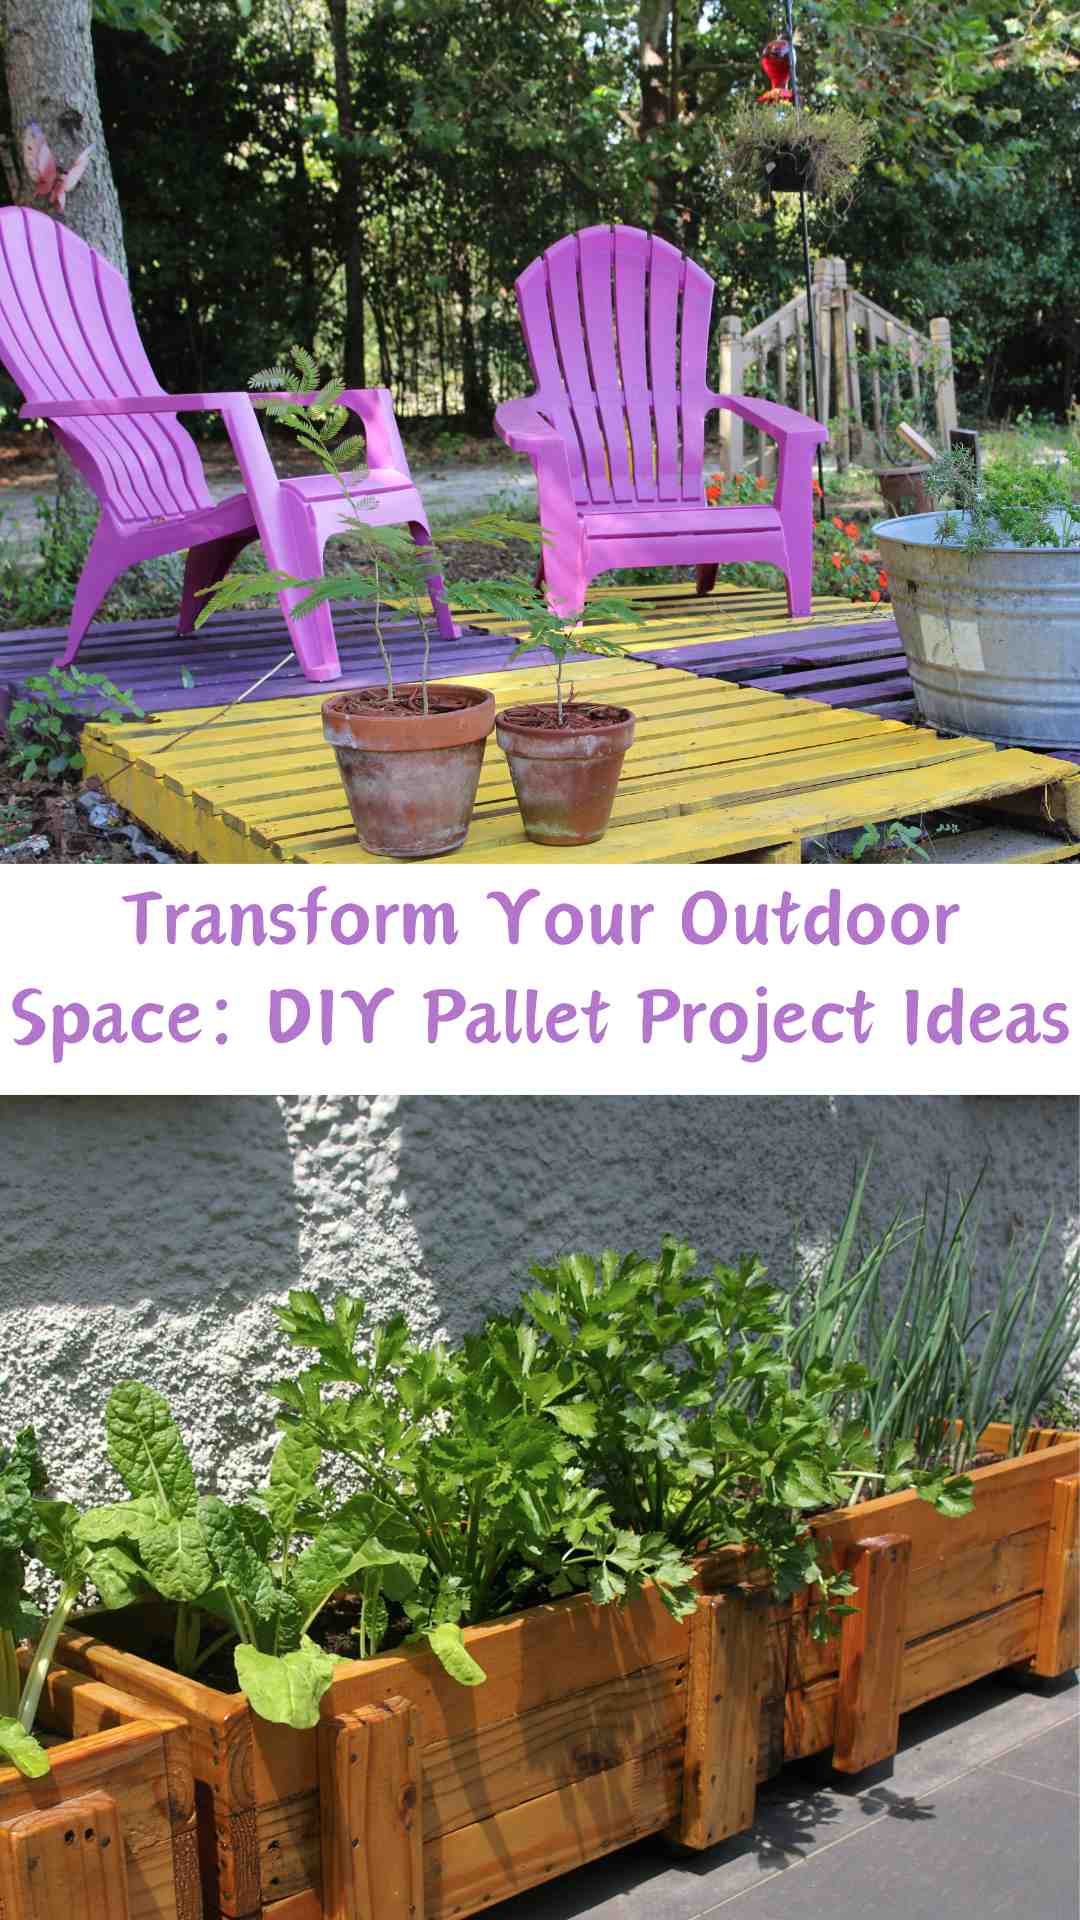 DIY Pallet Project Ideas